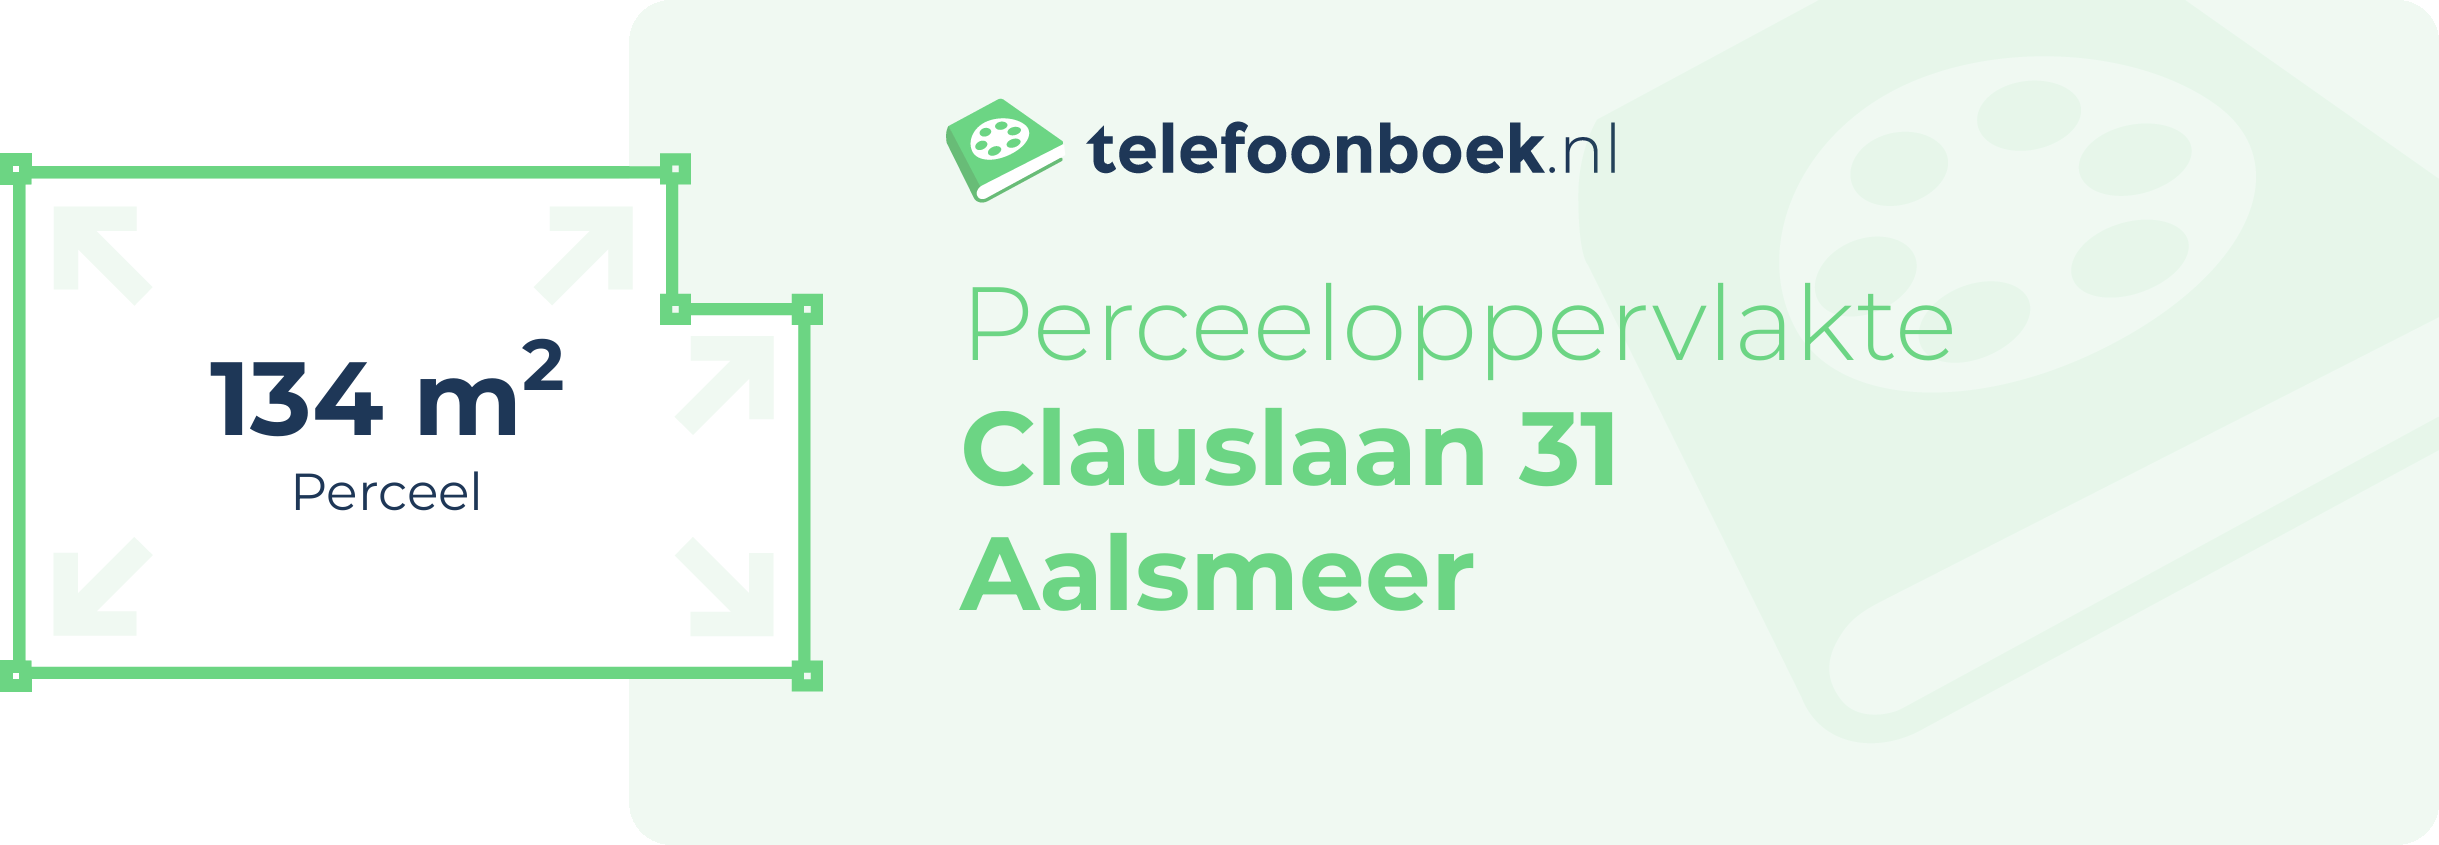 Perceeloppervlakte Clauslaan 31 Aalsmeer